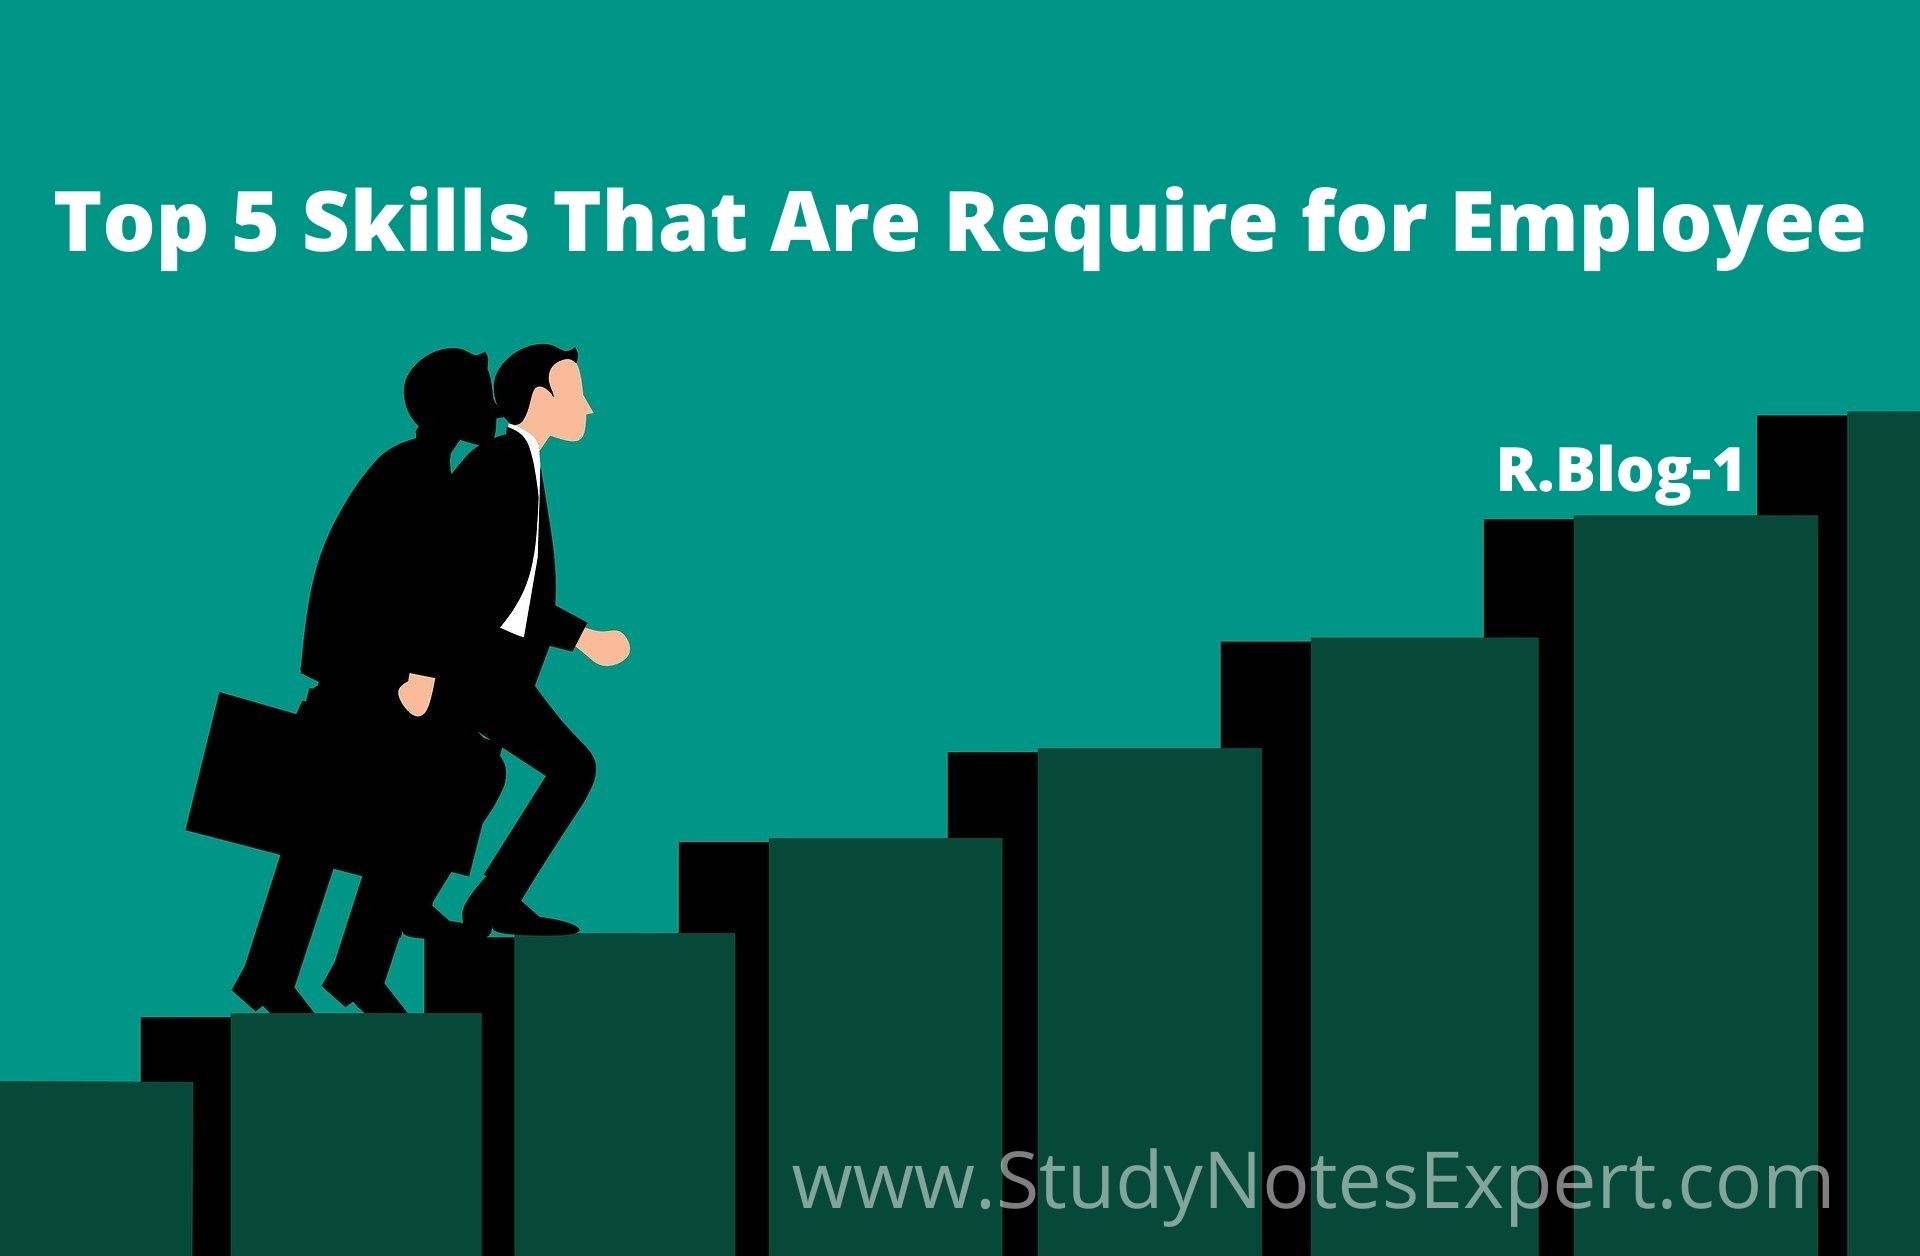 5 Most Important Skills for a Job